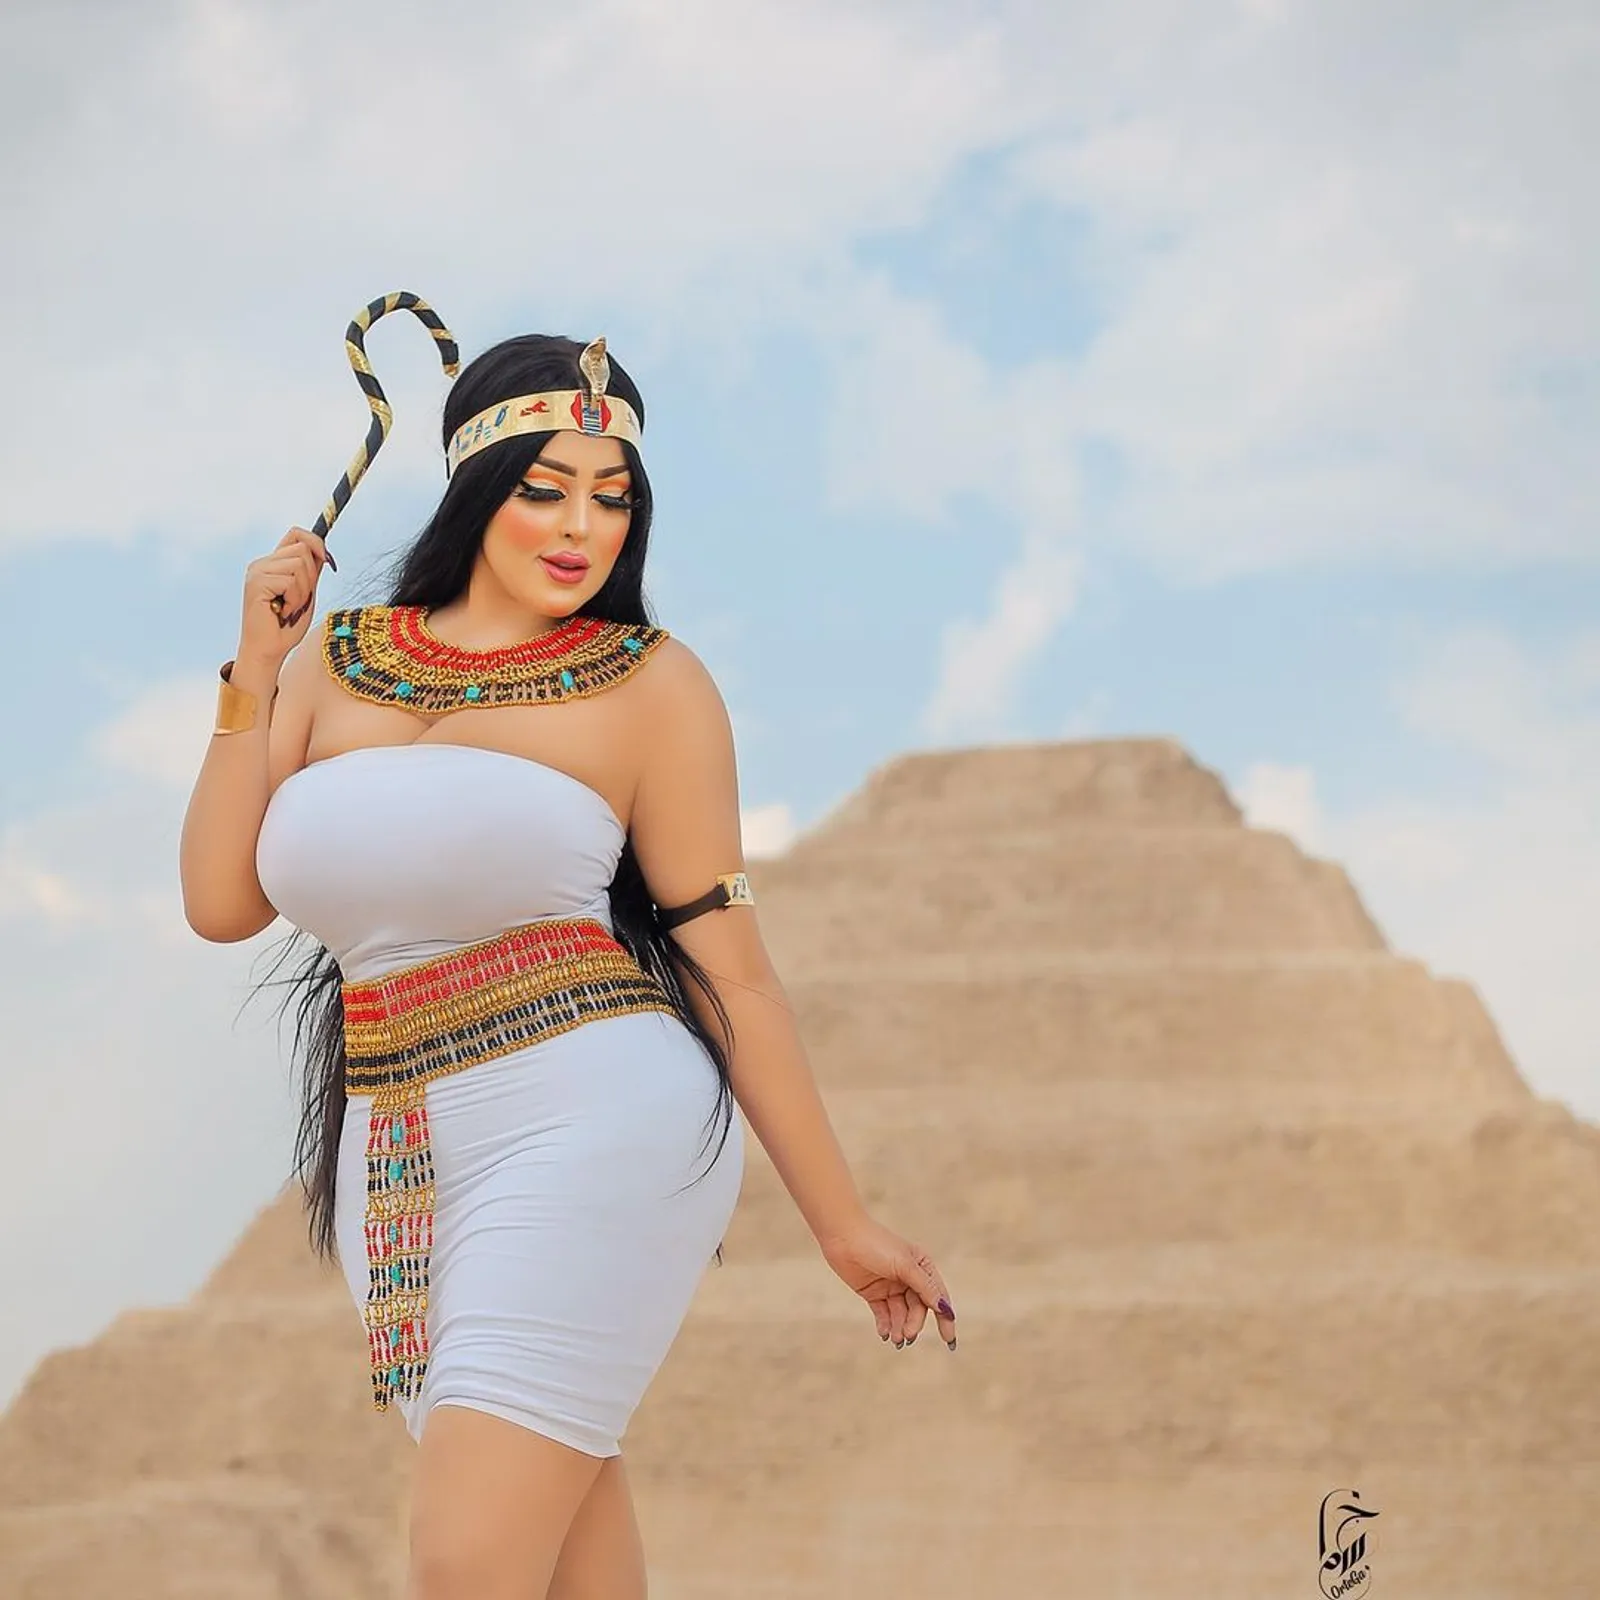 Foto Vulgar di Depan Piramida, Intip Potret Salma Elshimy!